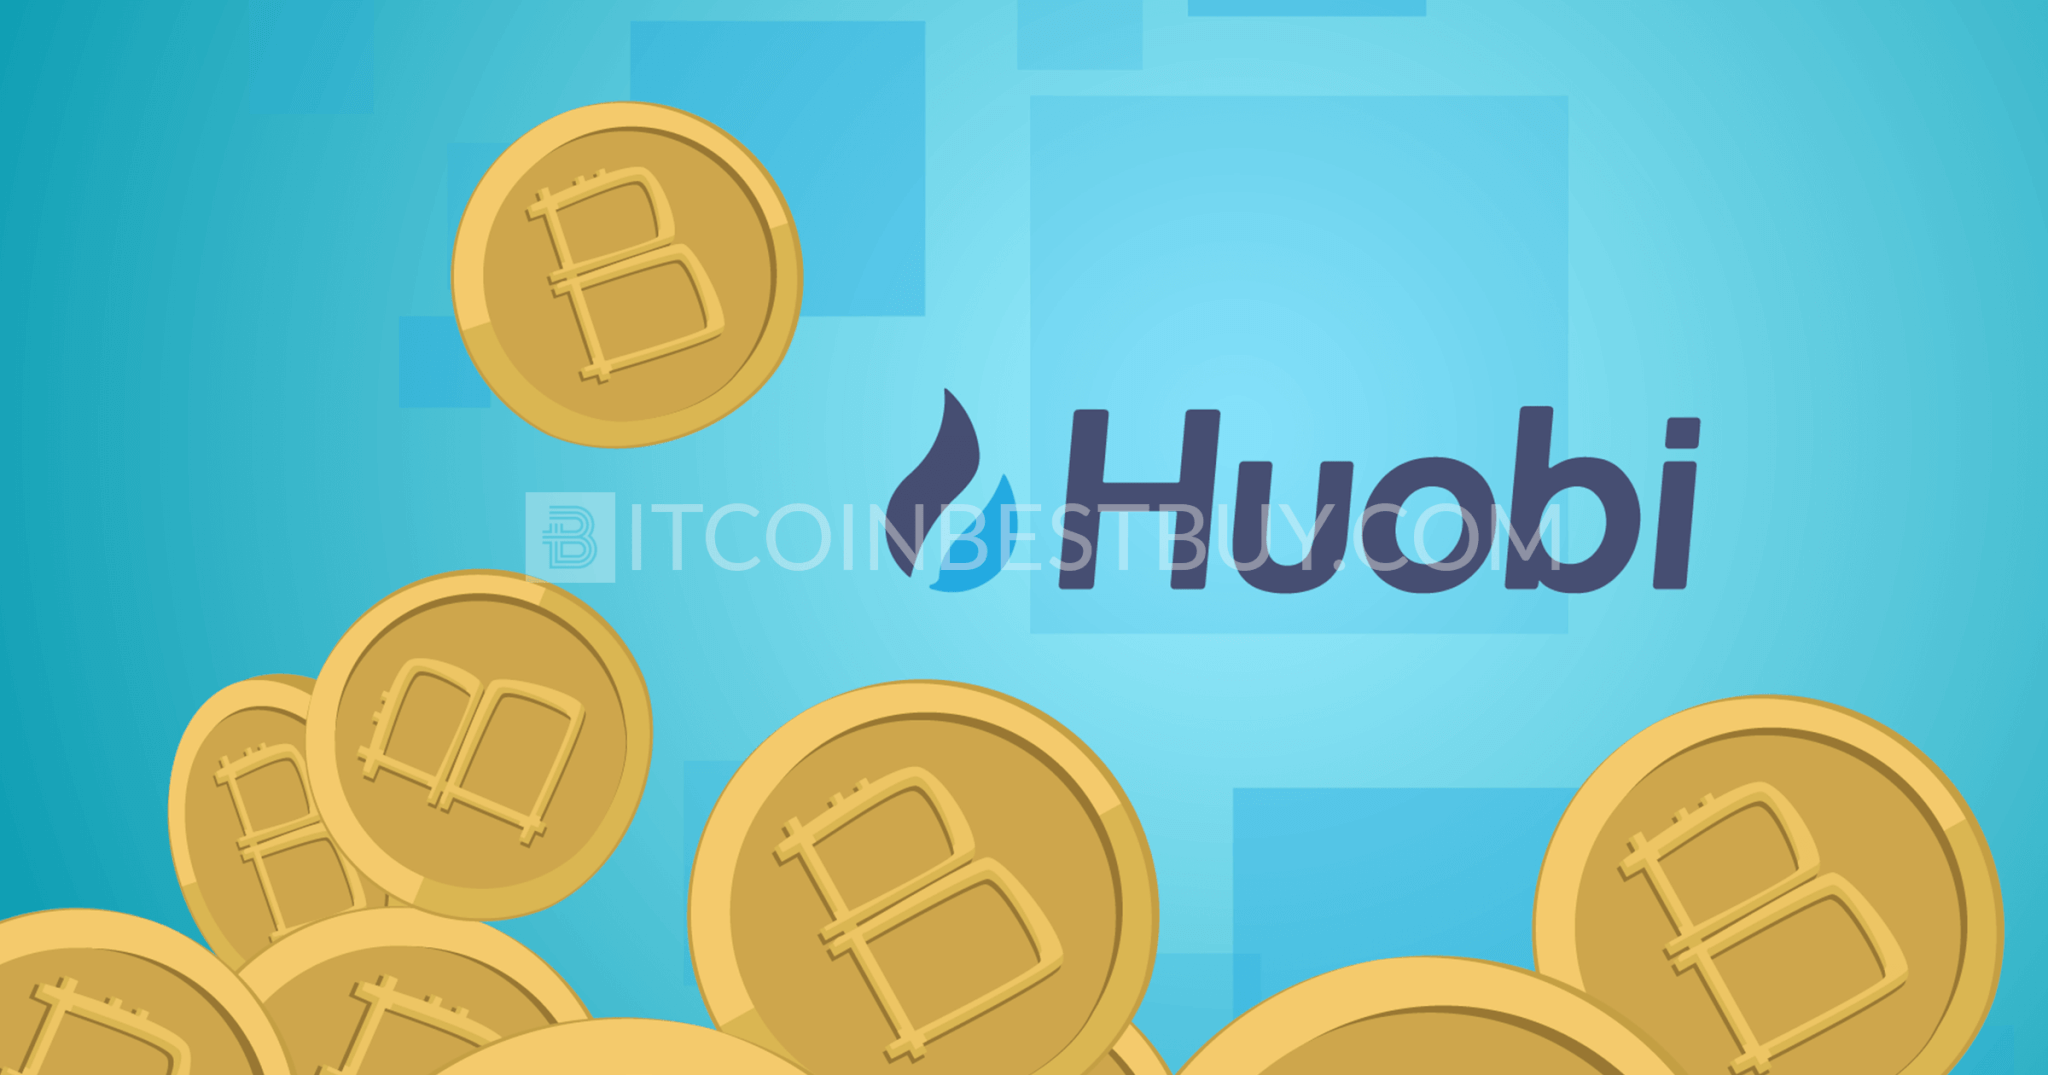 Huobi exchange review